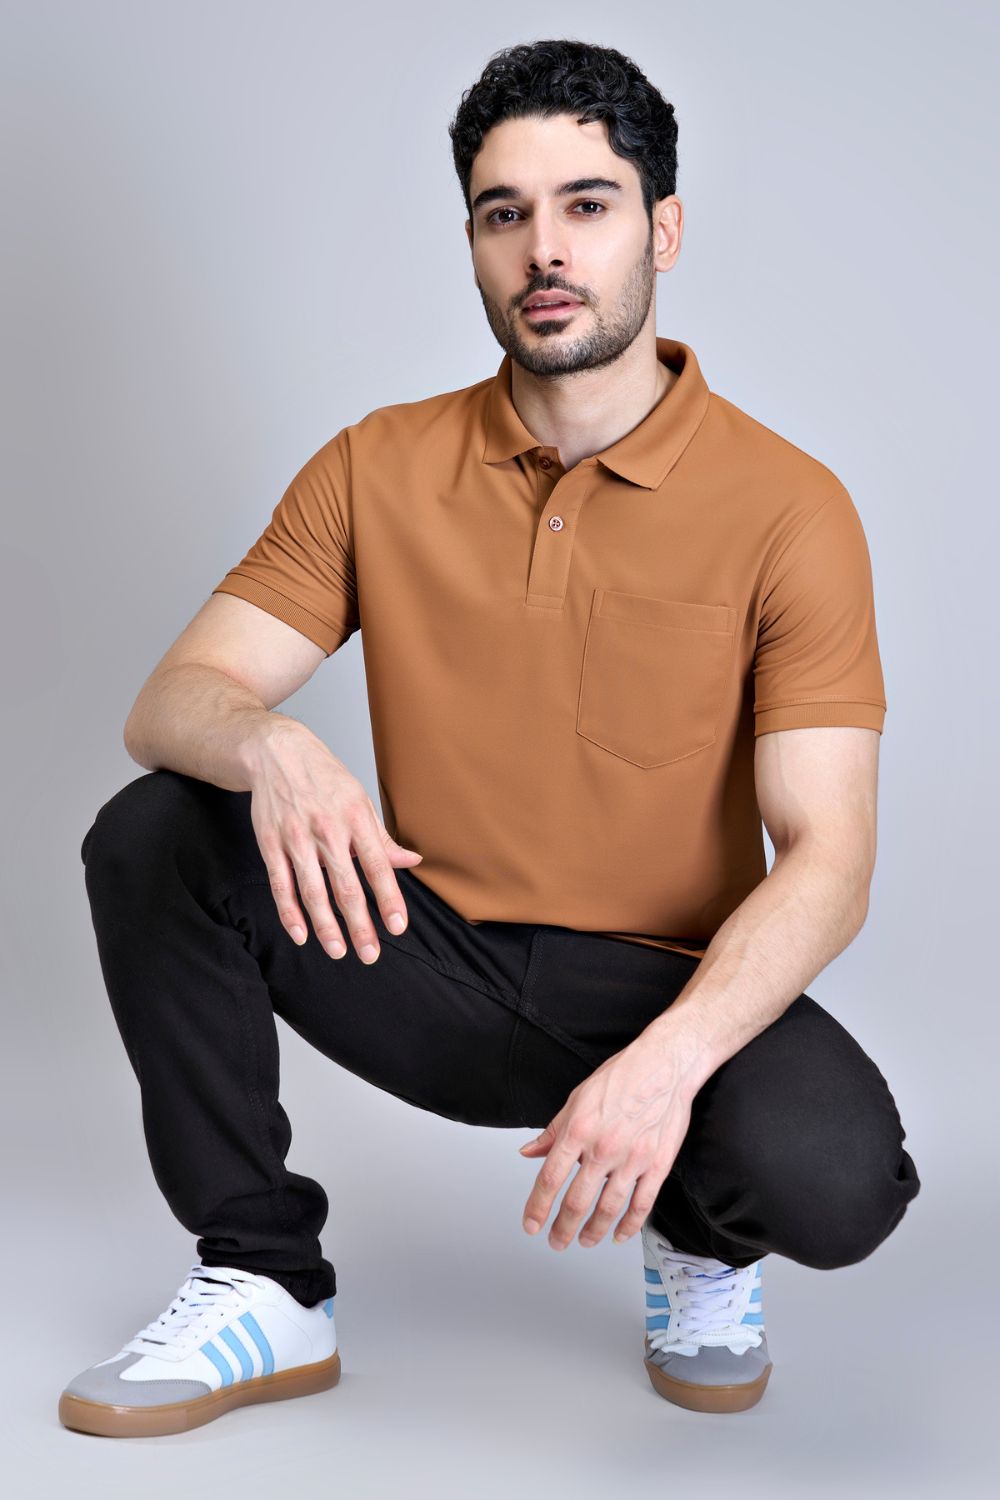 Caramel Smart Tech Pocket + Polo T-shirts Maxzone Clothing   